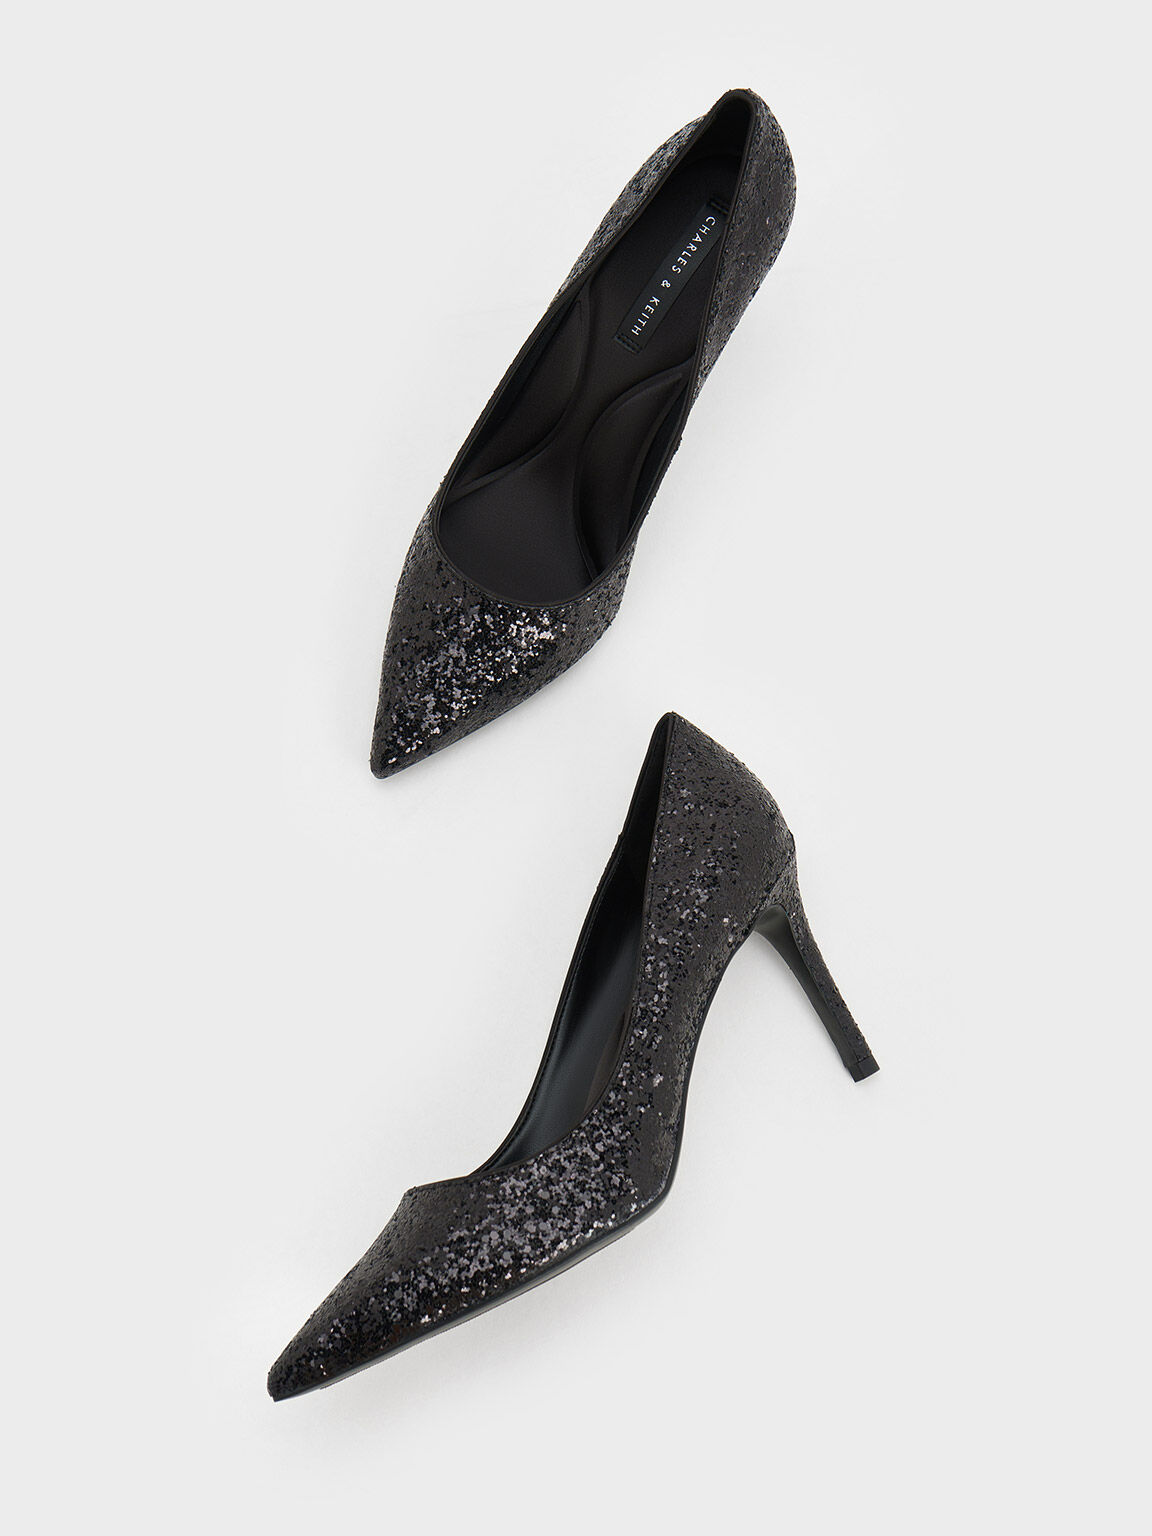 sparkles | Black sparkly heels, Heels, Fashion shoes